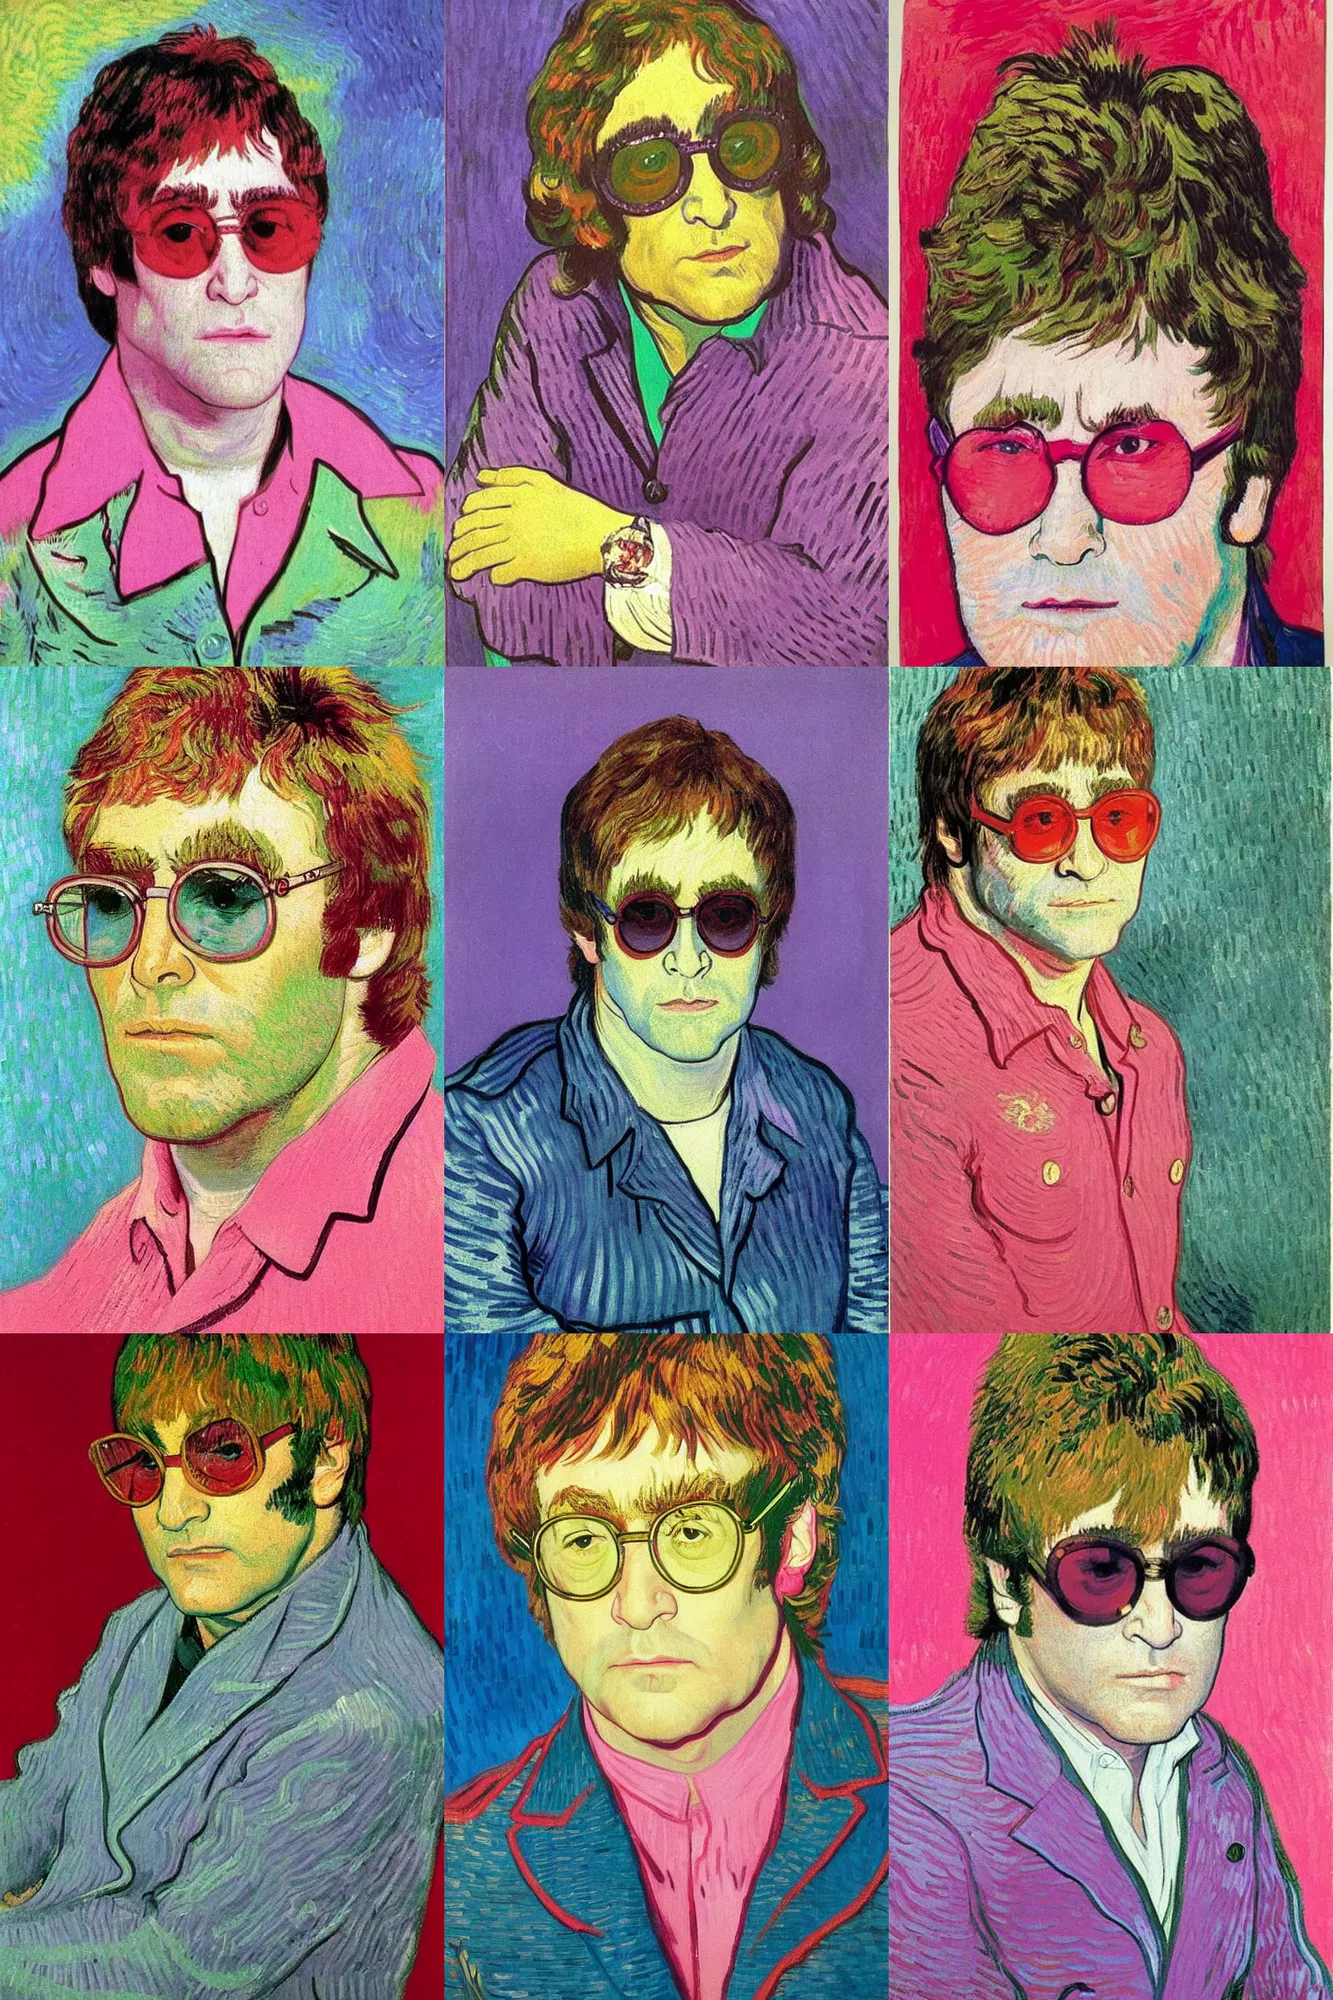 Prompt: Portrait of Elton John Lennon using pink shirt in 1970 by Van gogh